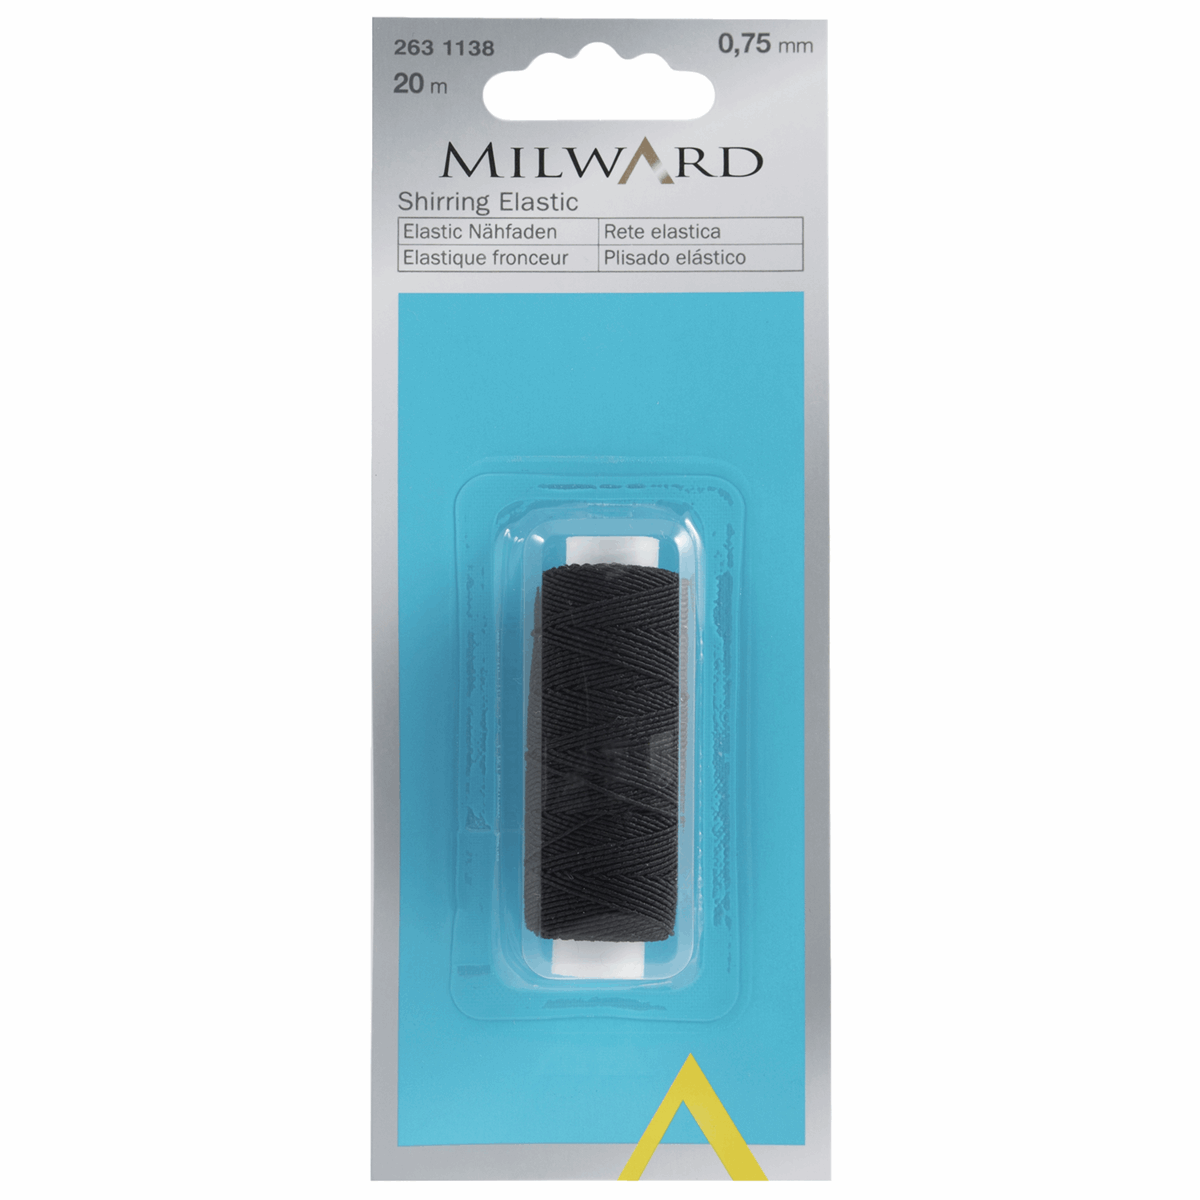 Milward Shirring Elastic - Black